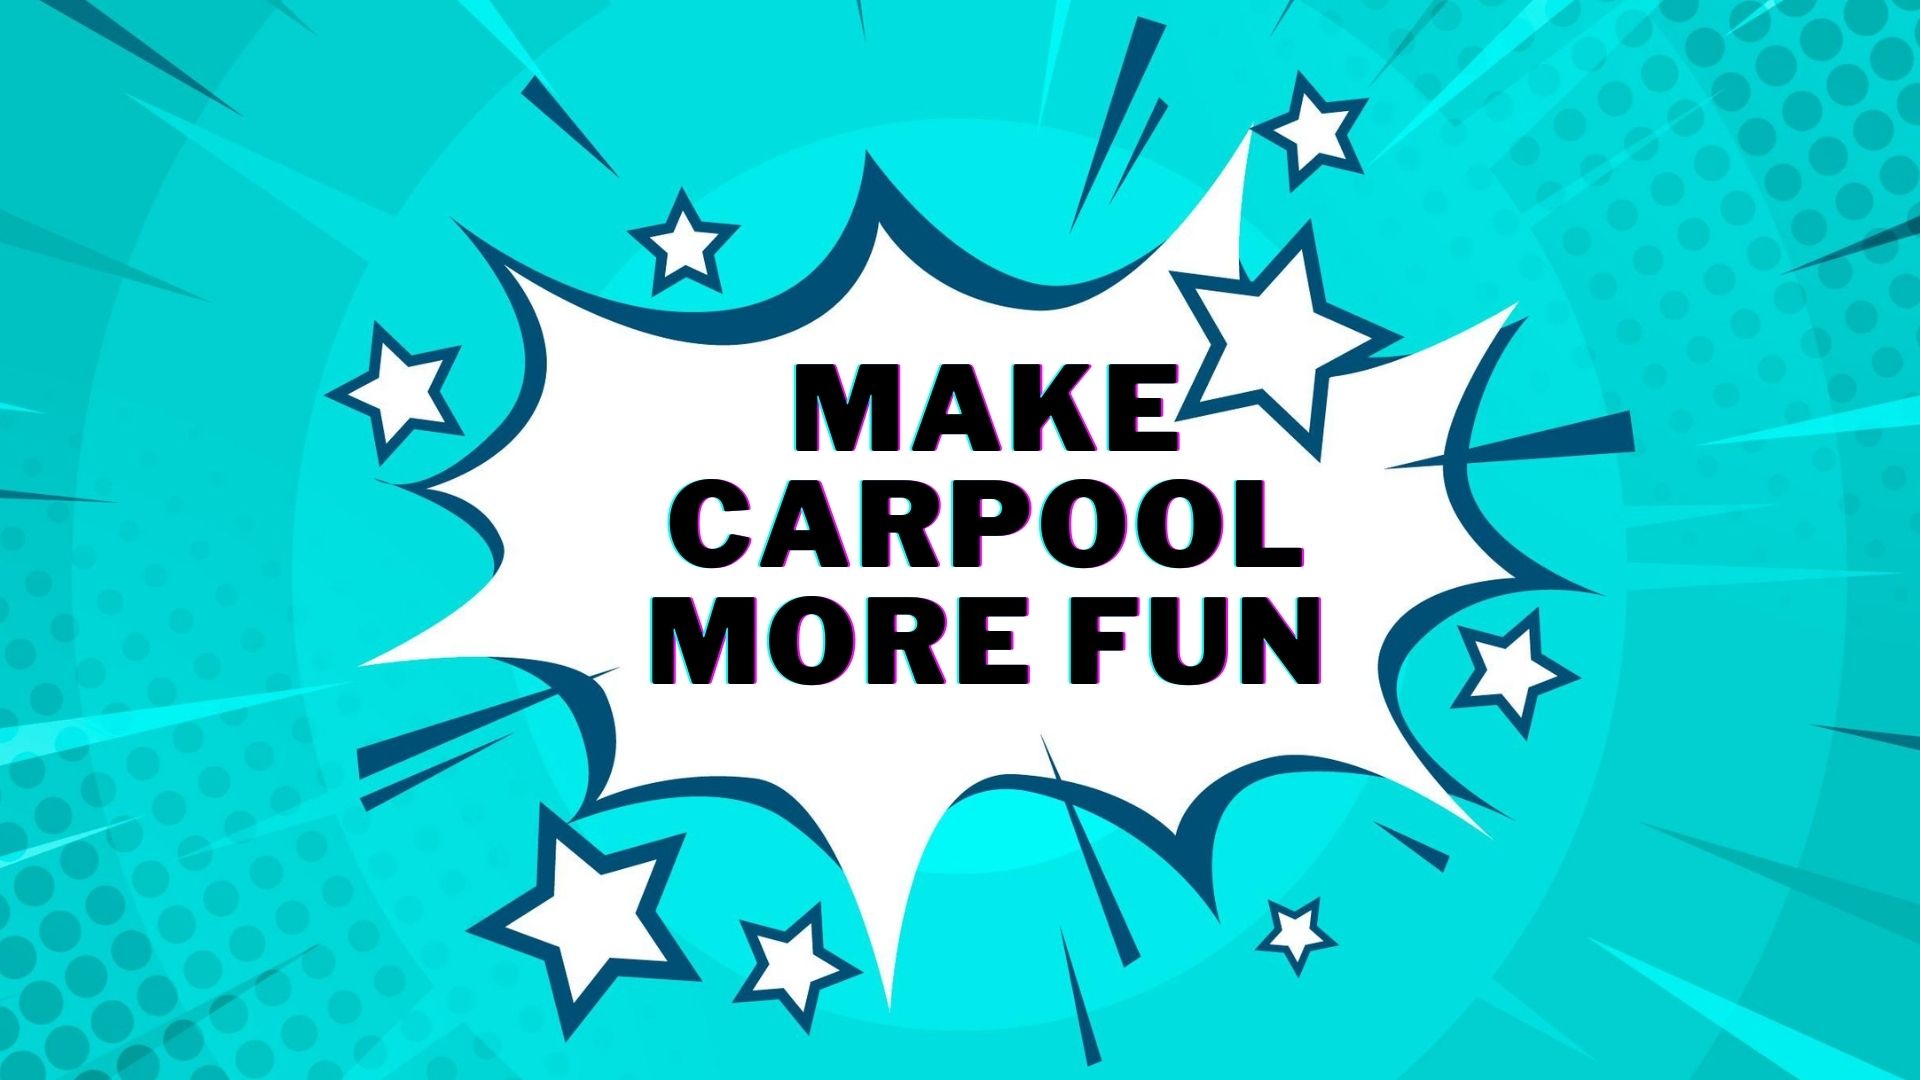 Make Carpool more fun